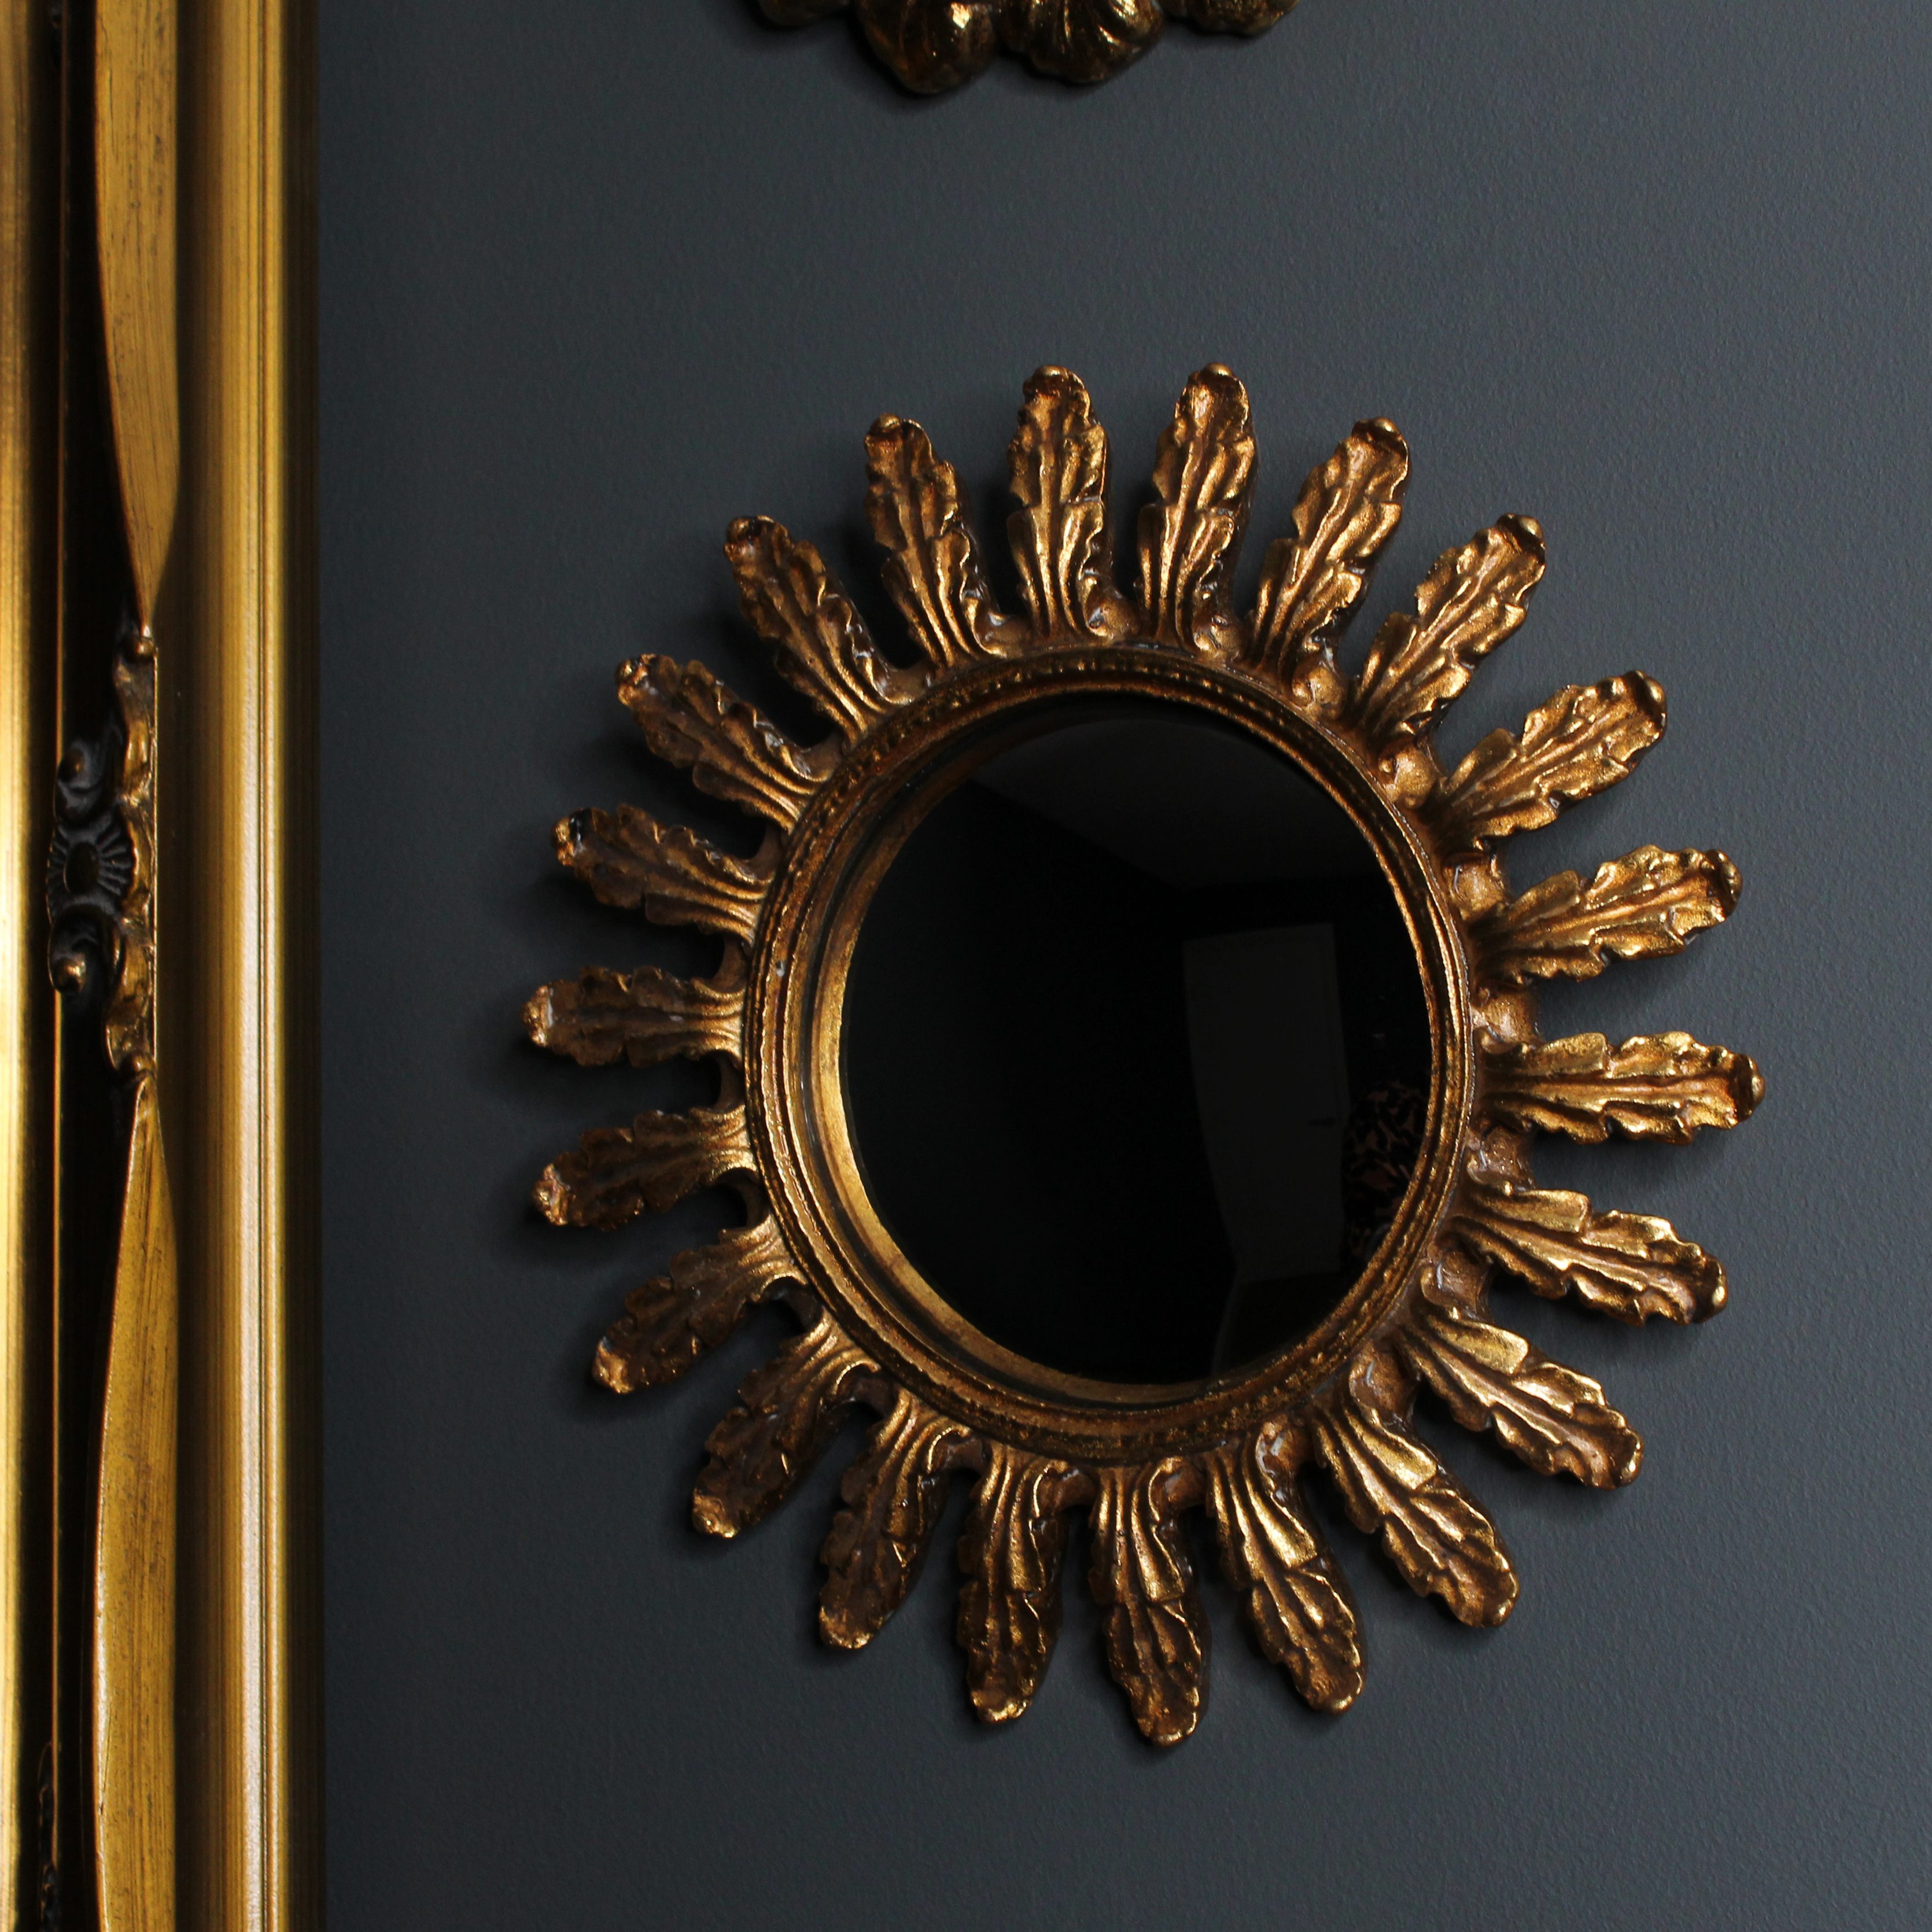 Carlo Baroque Mirror - The Blackened Teeth